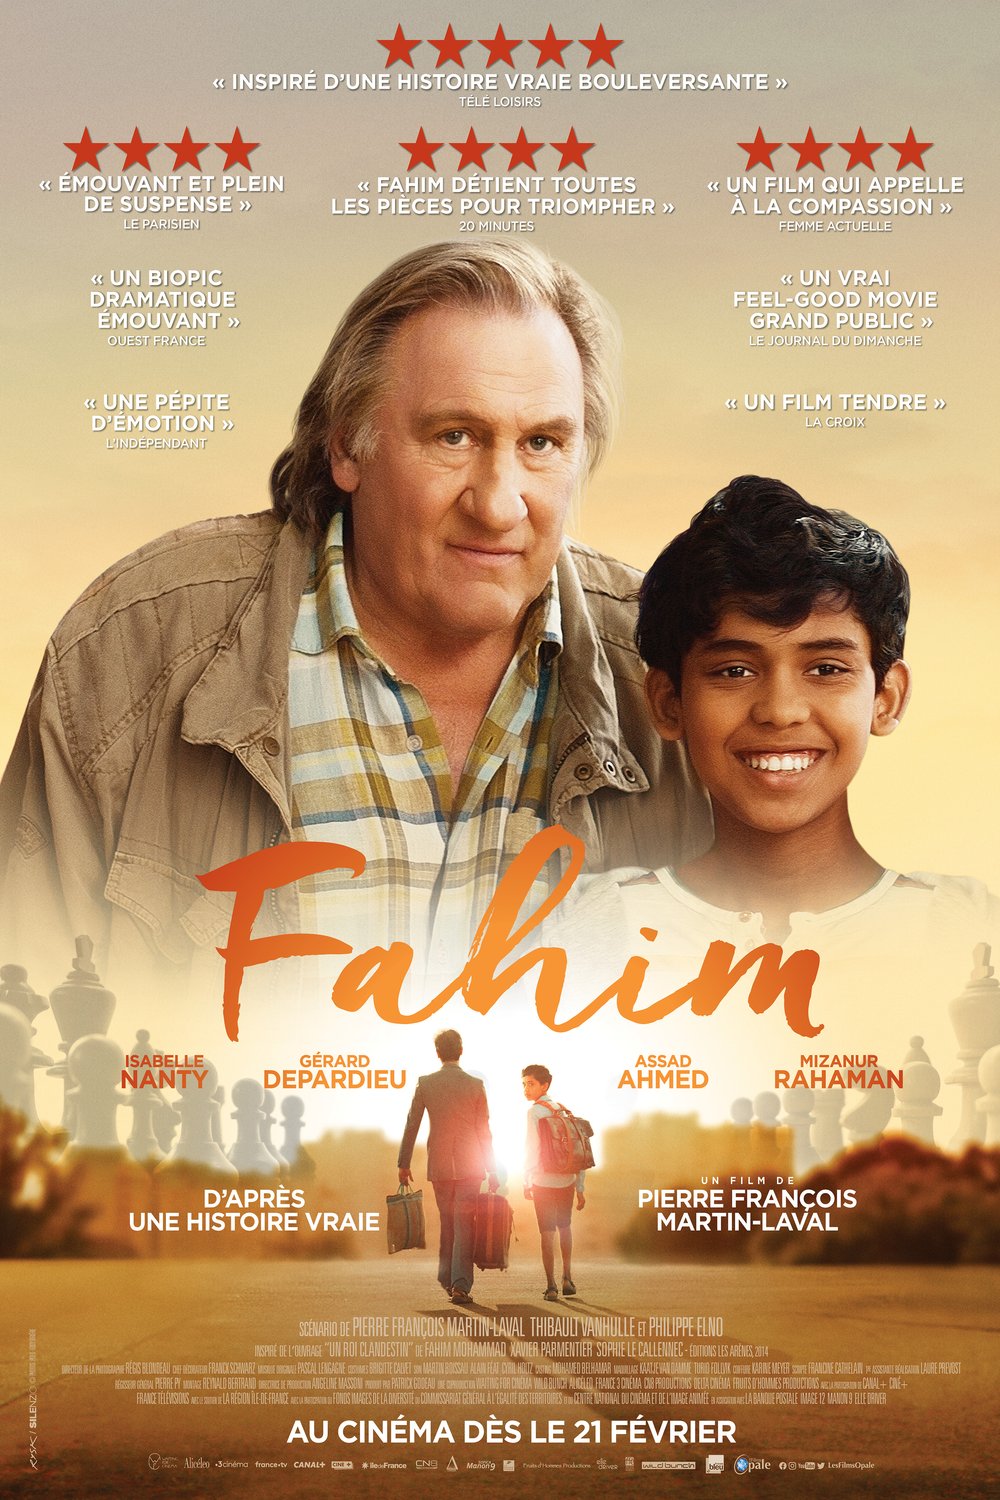 L'affiche du film Fahim